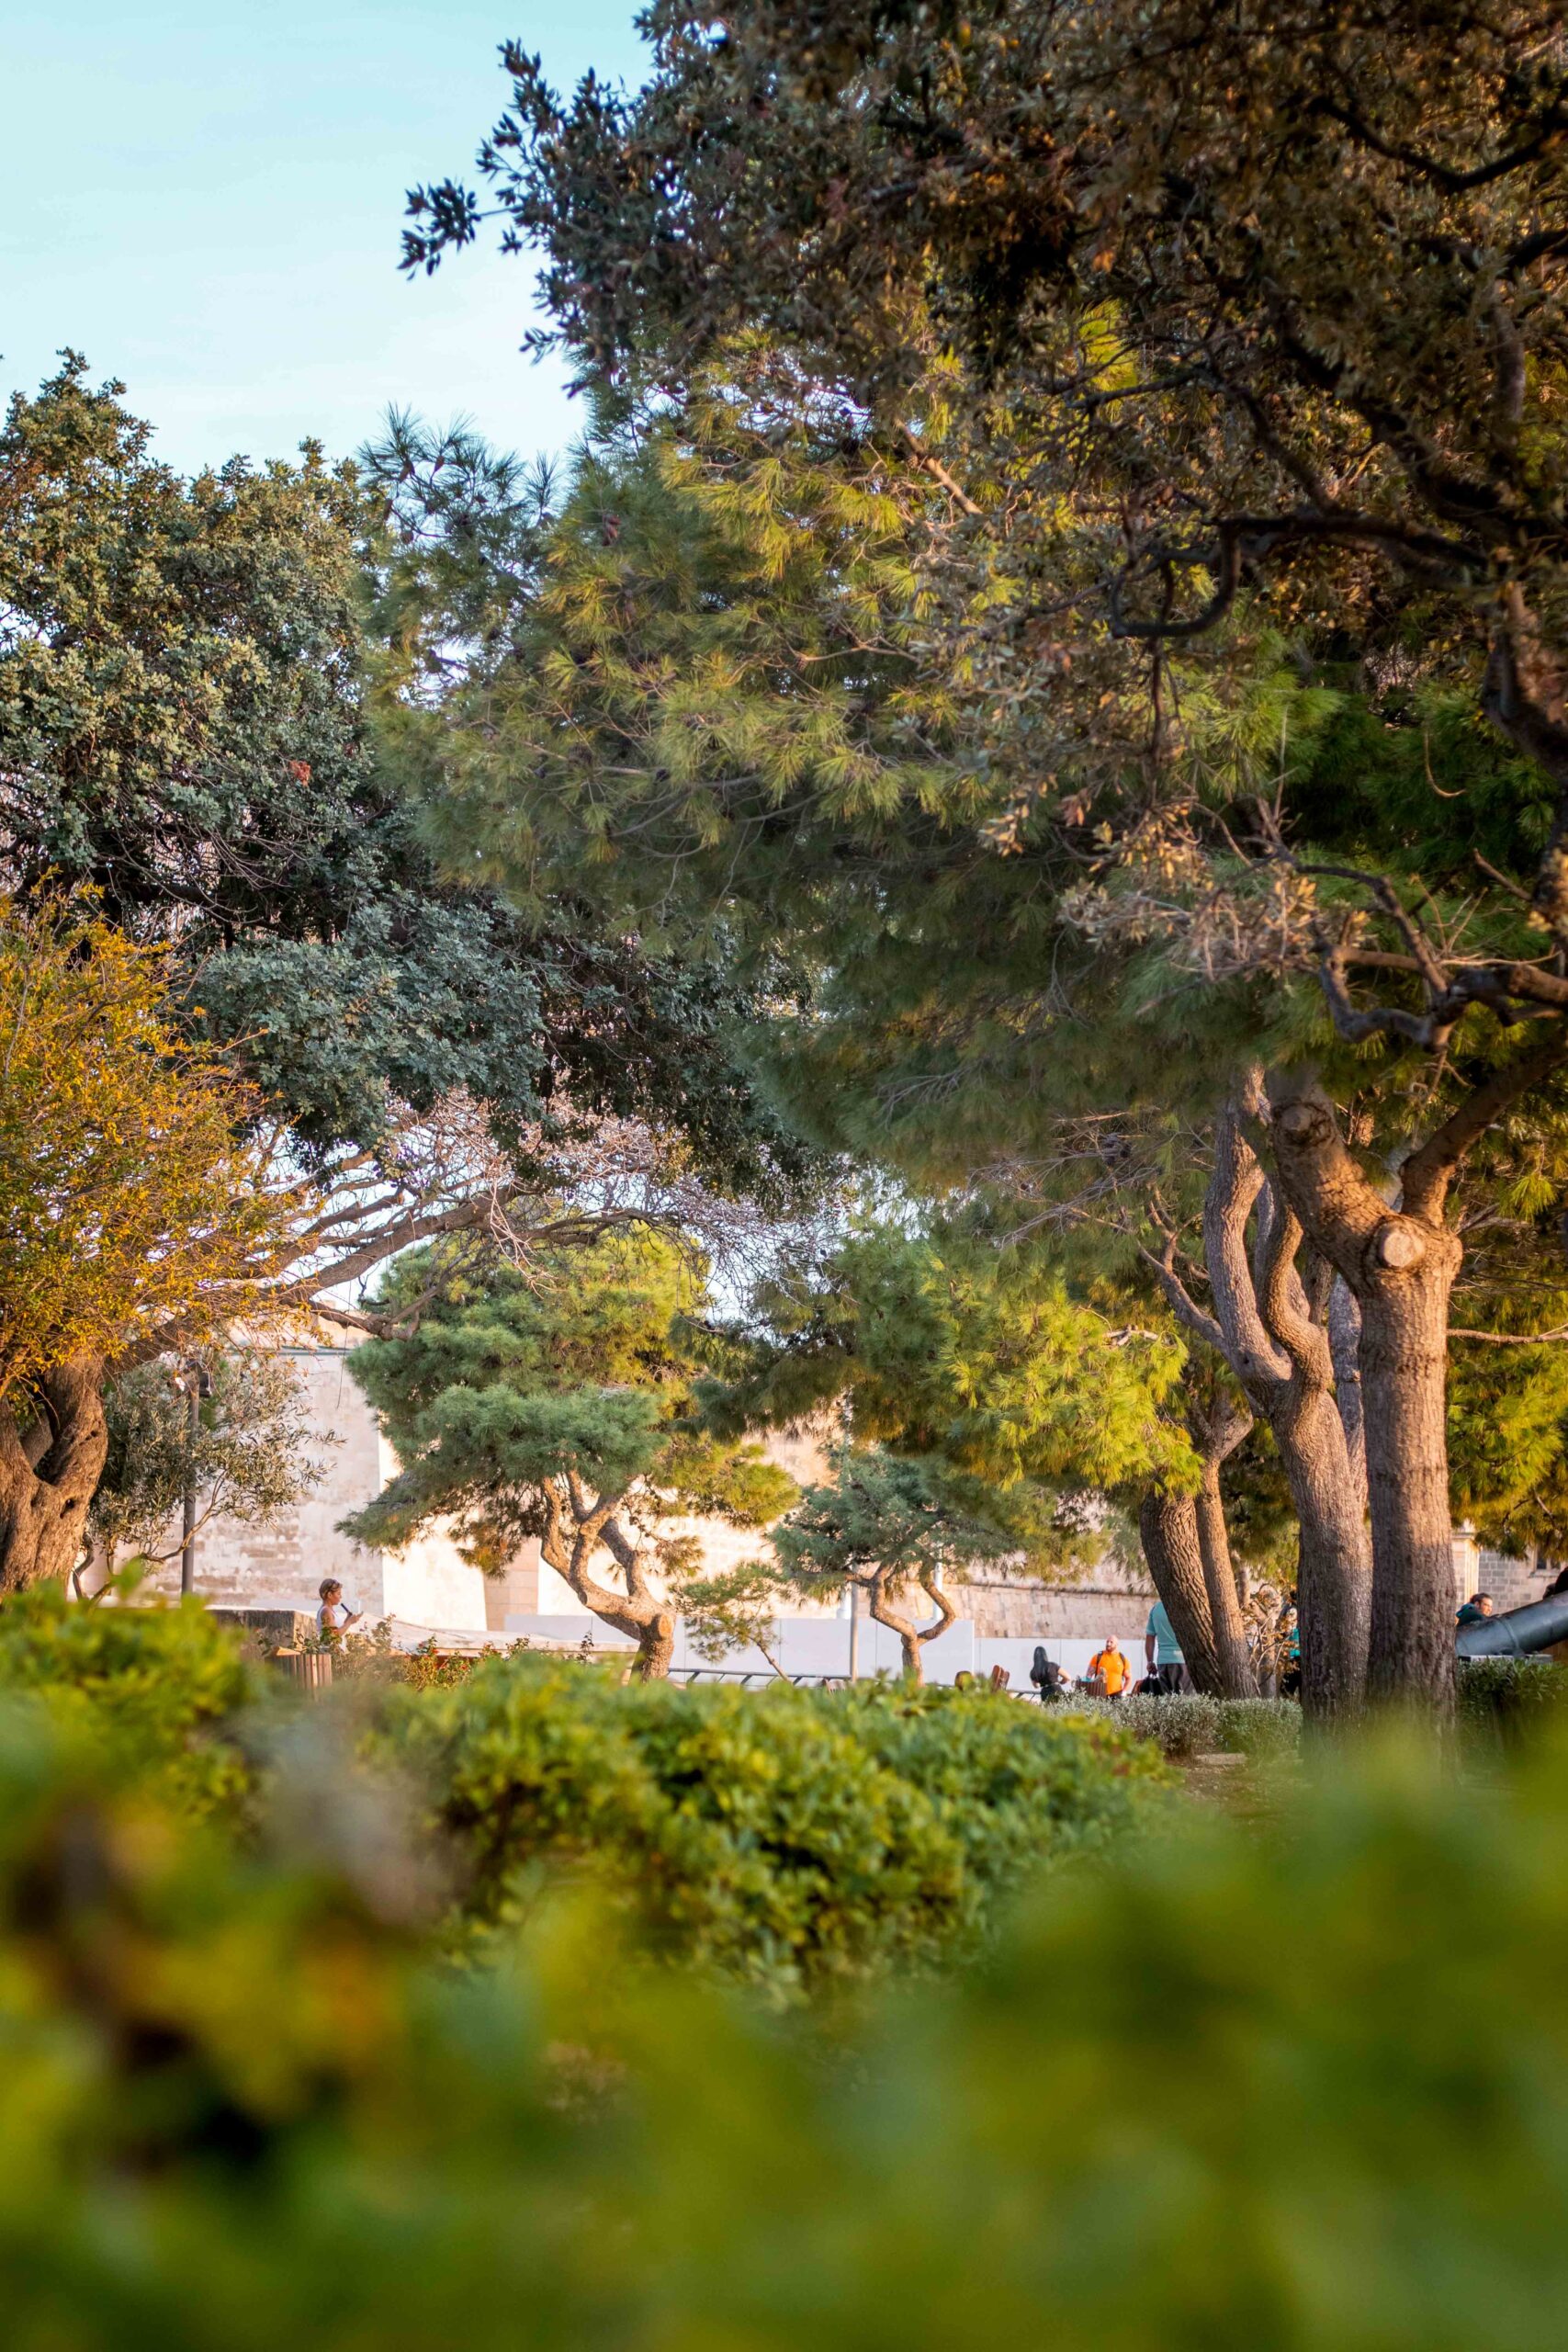 Trees and vegetation in the Hastings Garden in Valletta, Malta